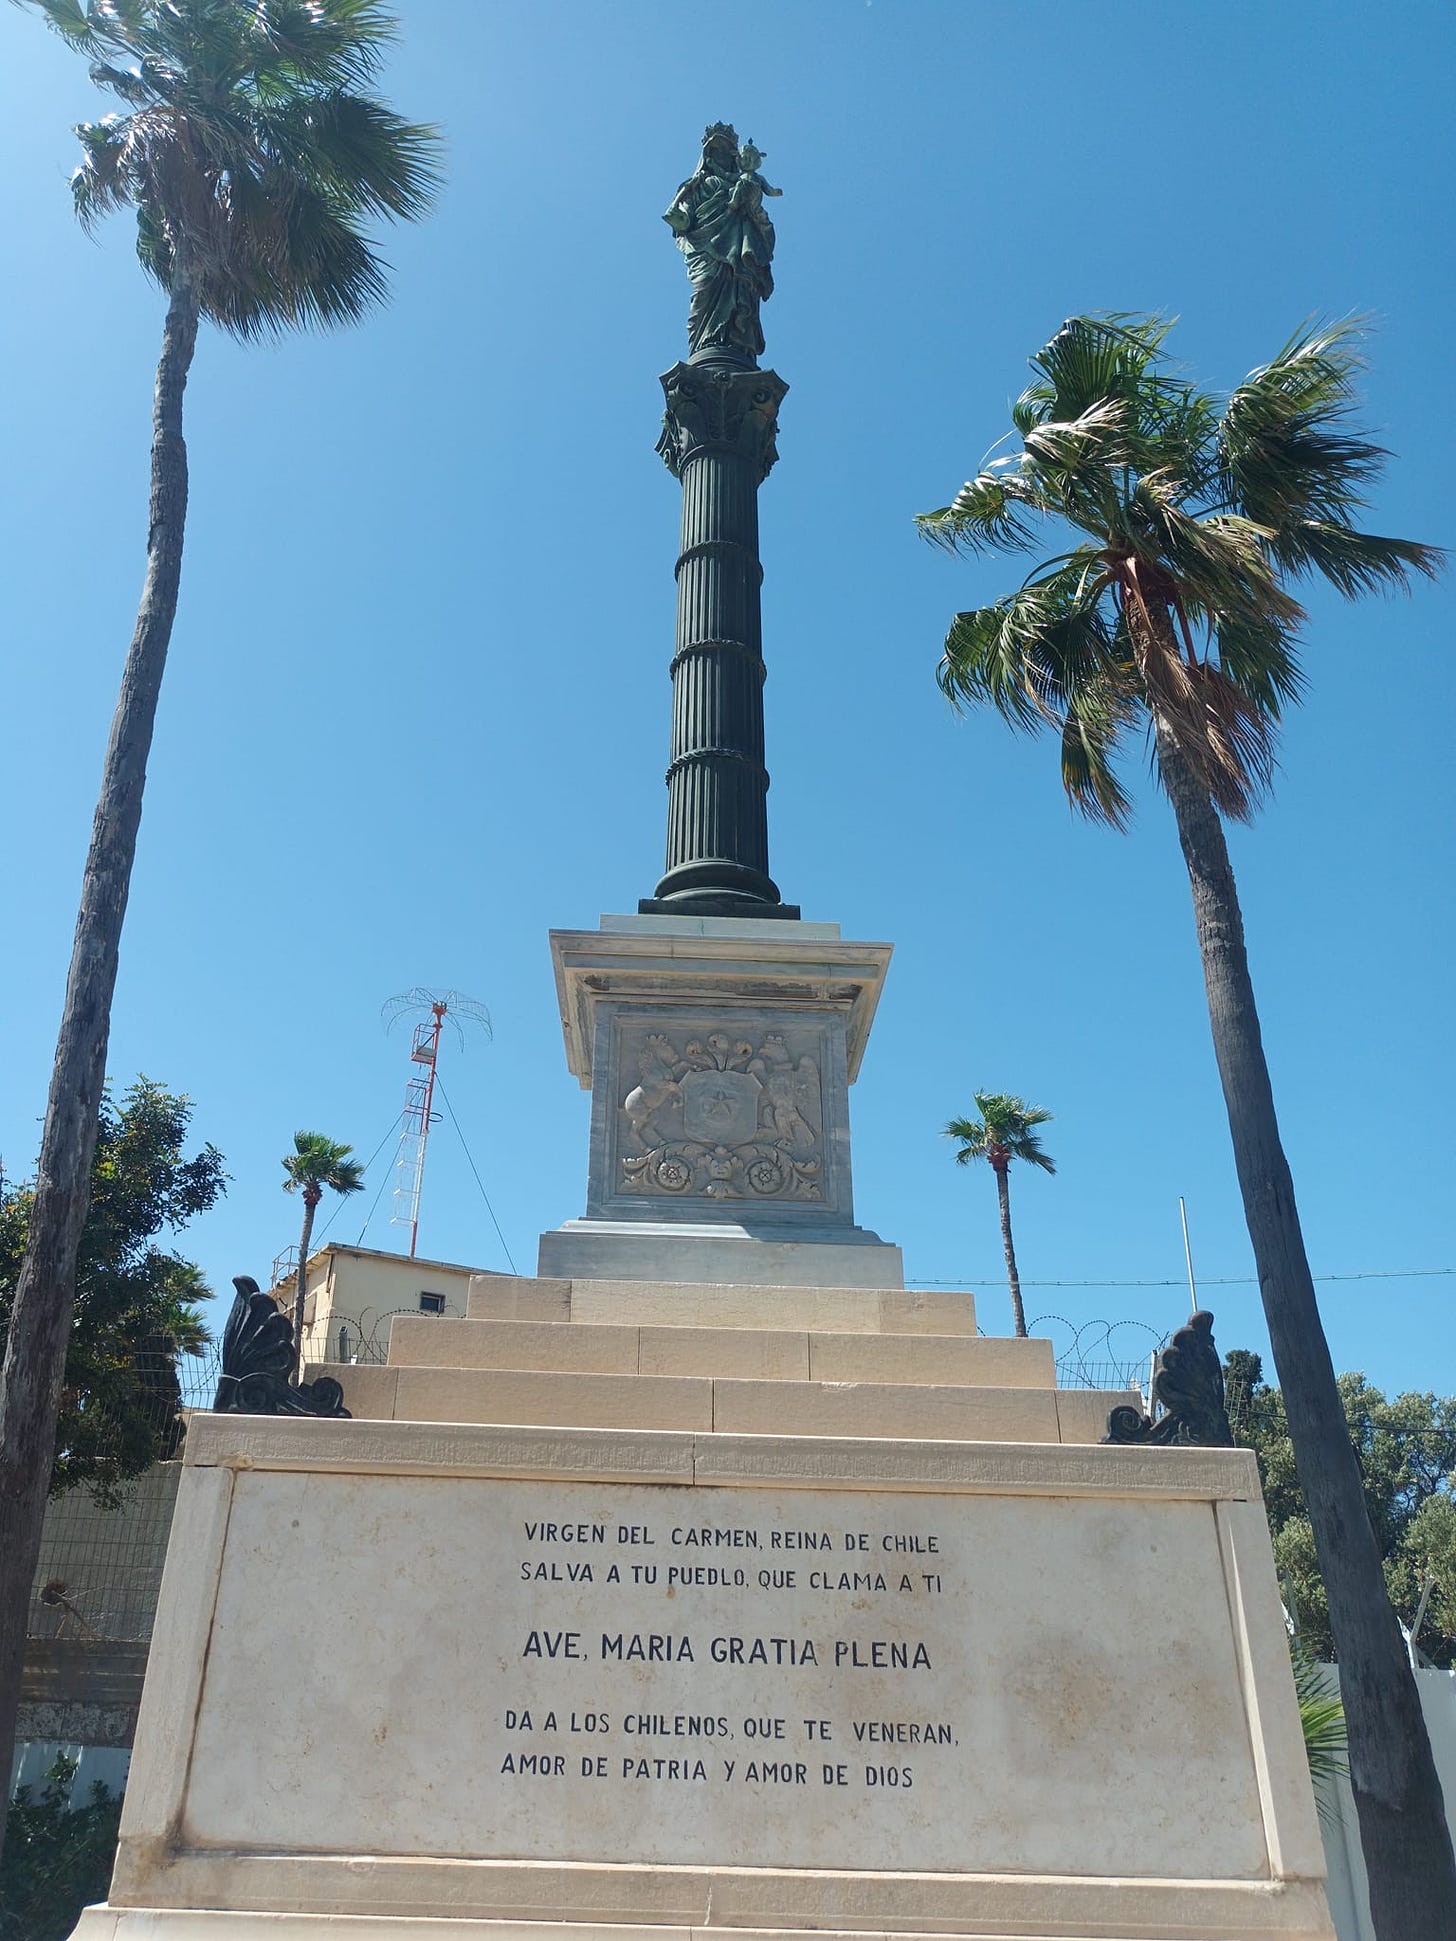 May be an image of monument and text that says "VIRGEN DEL CARMEN VIGEN REINA CHILE SALVA TU PUEDLO QUE CLAMA TI AVE, MARIA GRATIA PLENA DA AL LOS CHILENOS, QUE TE VENERAN. AMOR DE PATRIA AMOR DE DIOS"